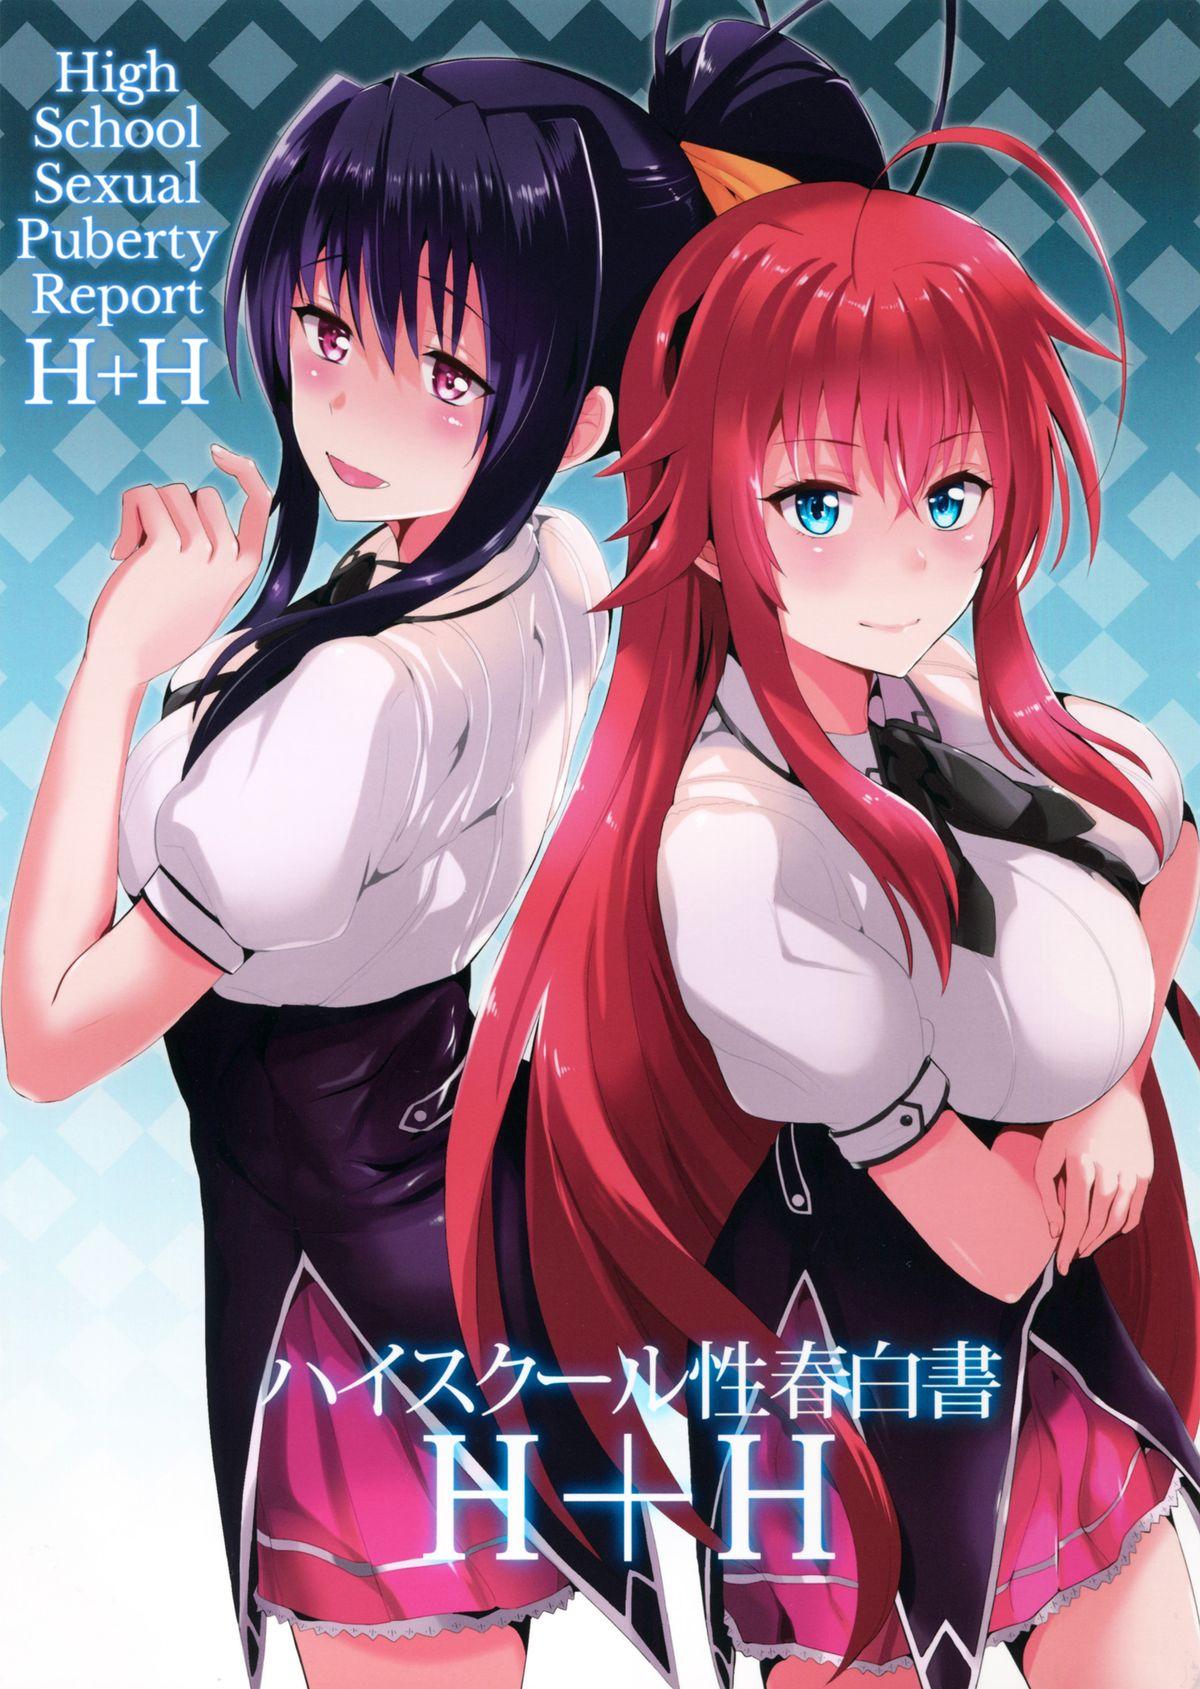 Highschool Seishun Hakusho H+H | High School Sexual Puberty Report H+H 0